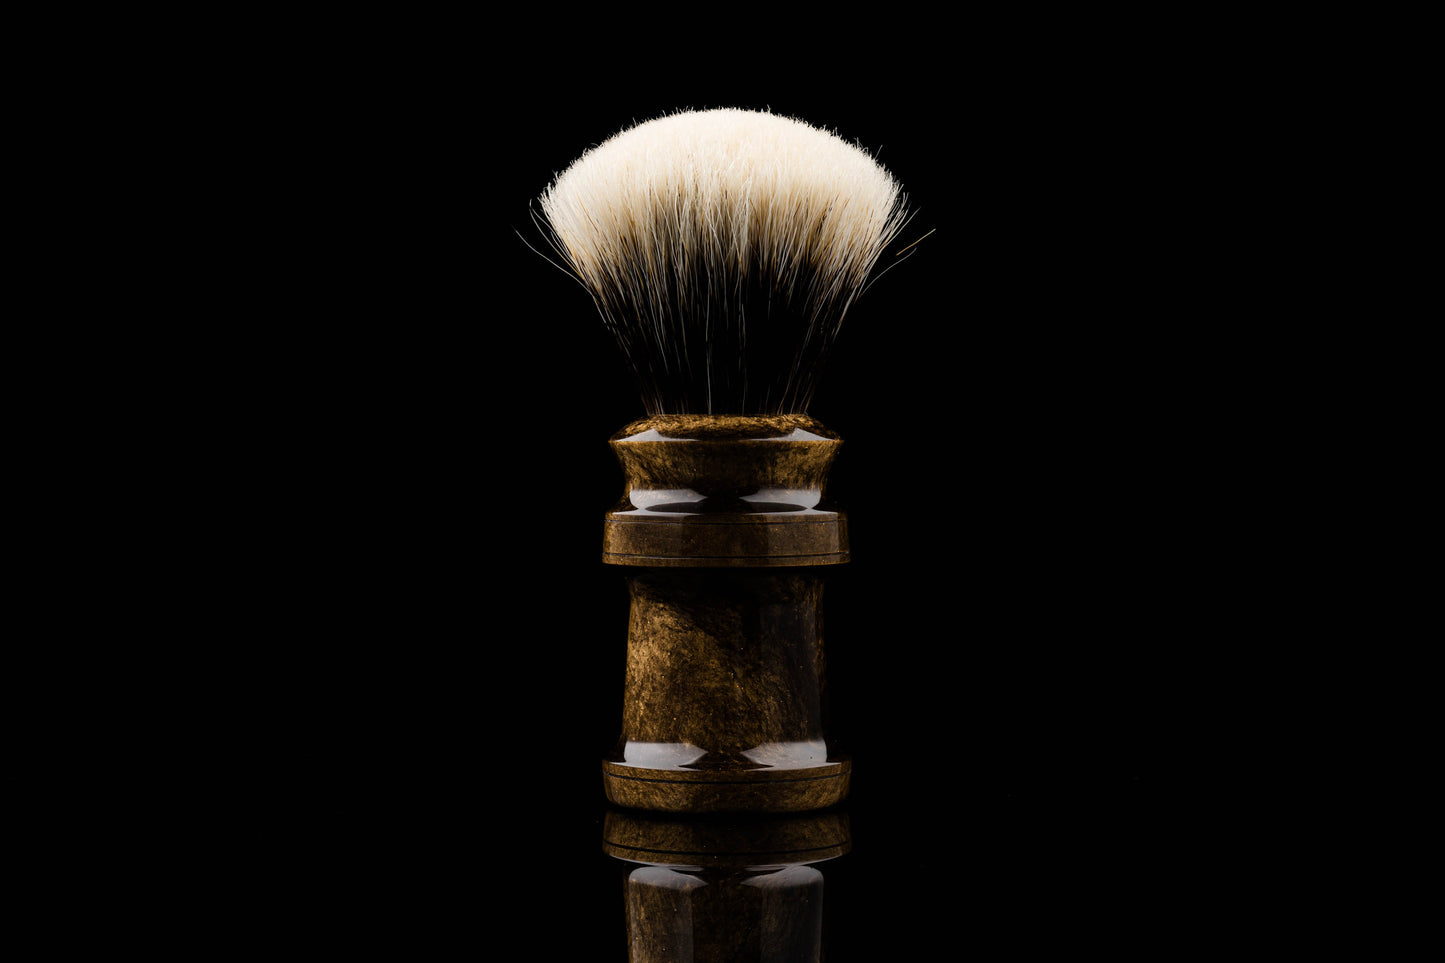 Ding - 1 - Panning shaving brush handle